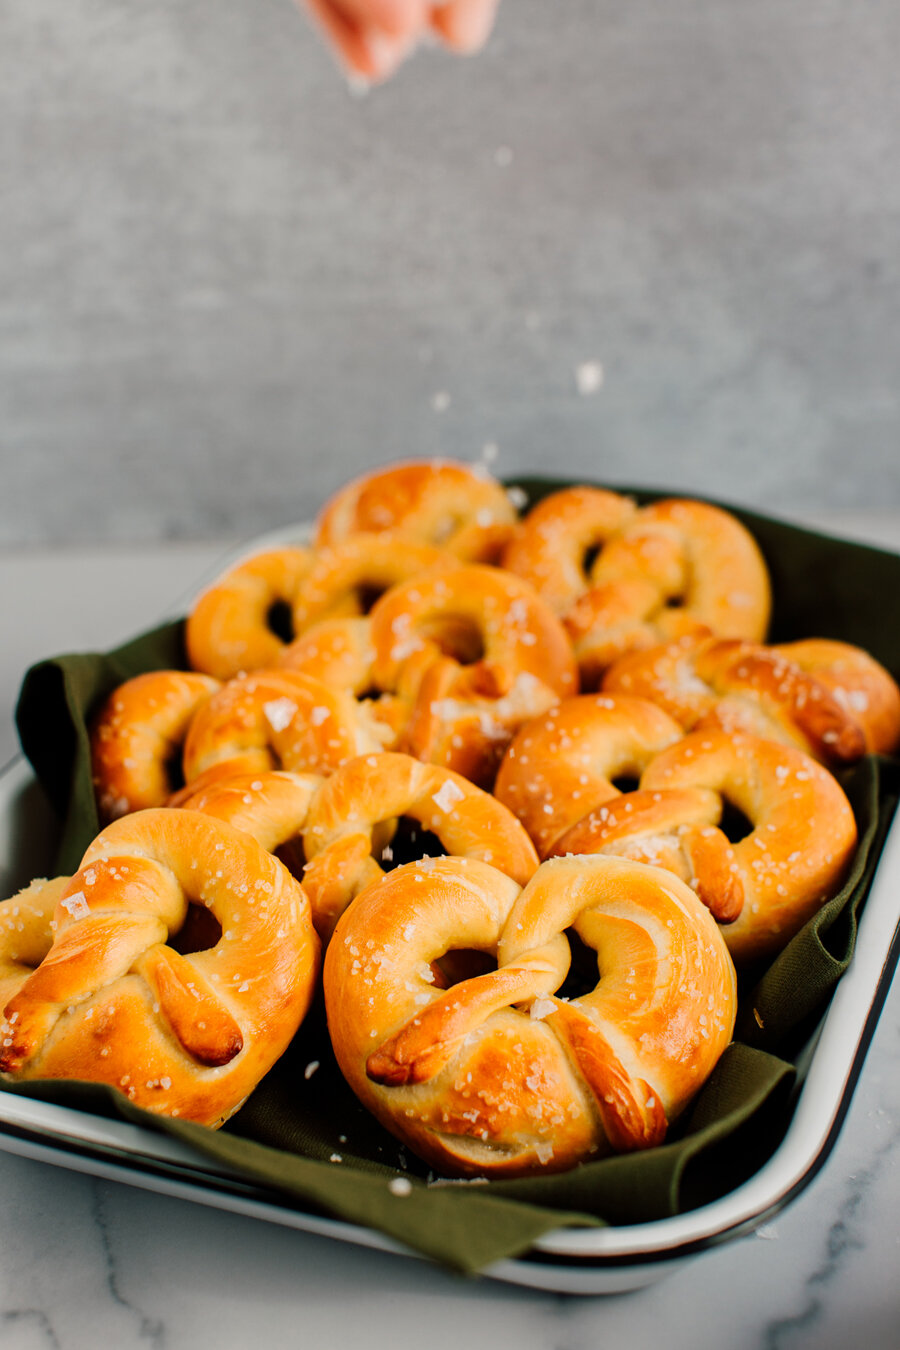 005-bellingham-food-photographer-katheryn-moran-pretzels-2020.jpg